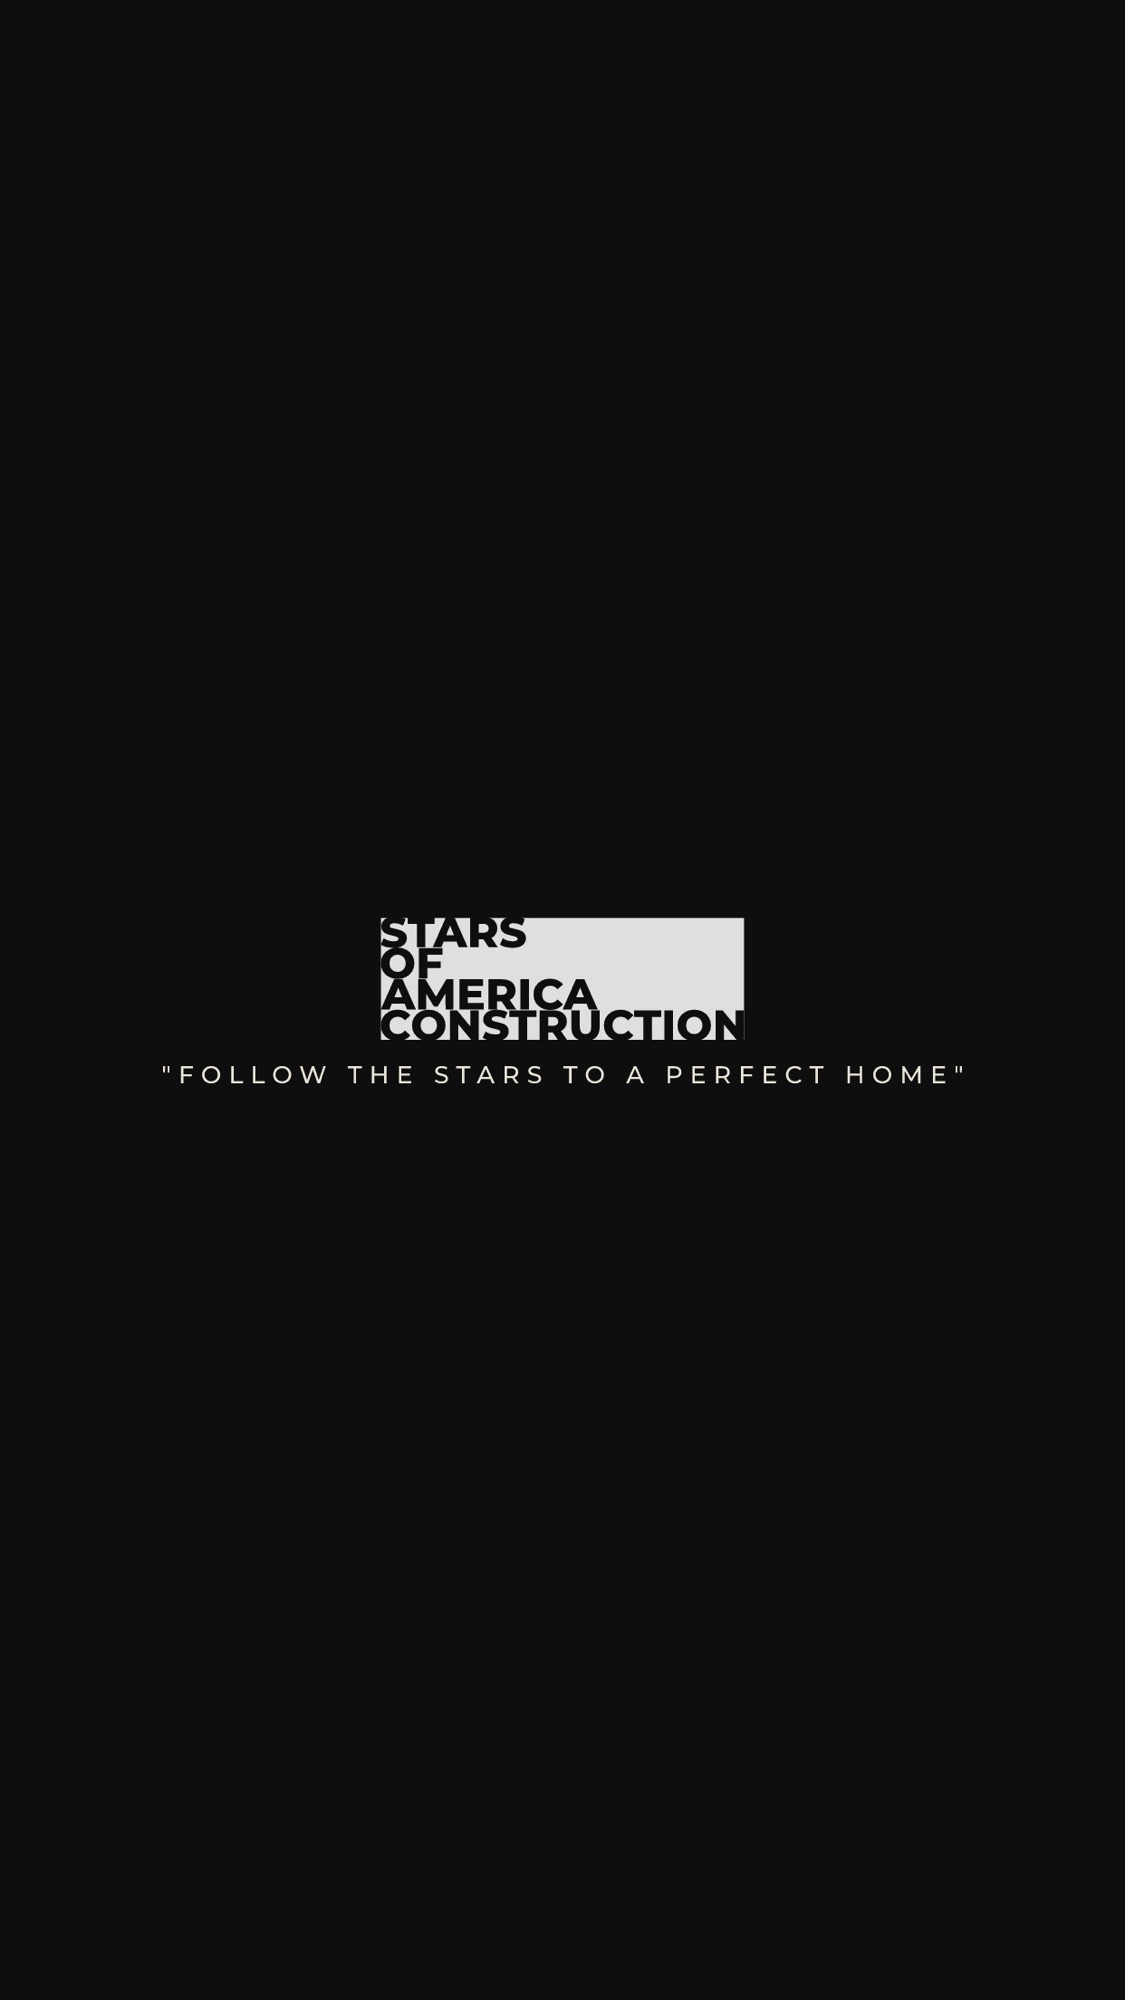 Stars of America Construction Corp. Logo